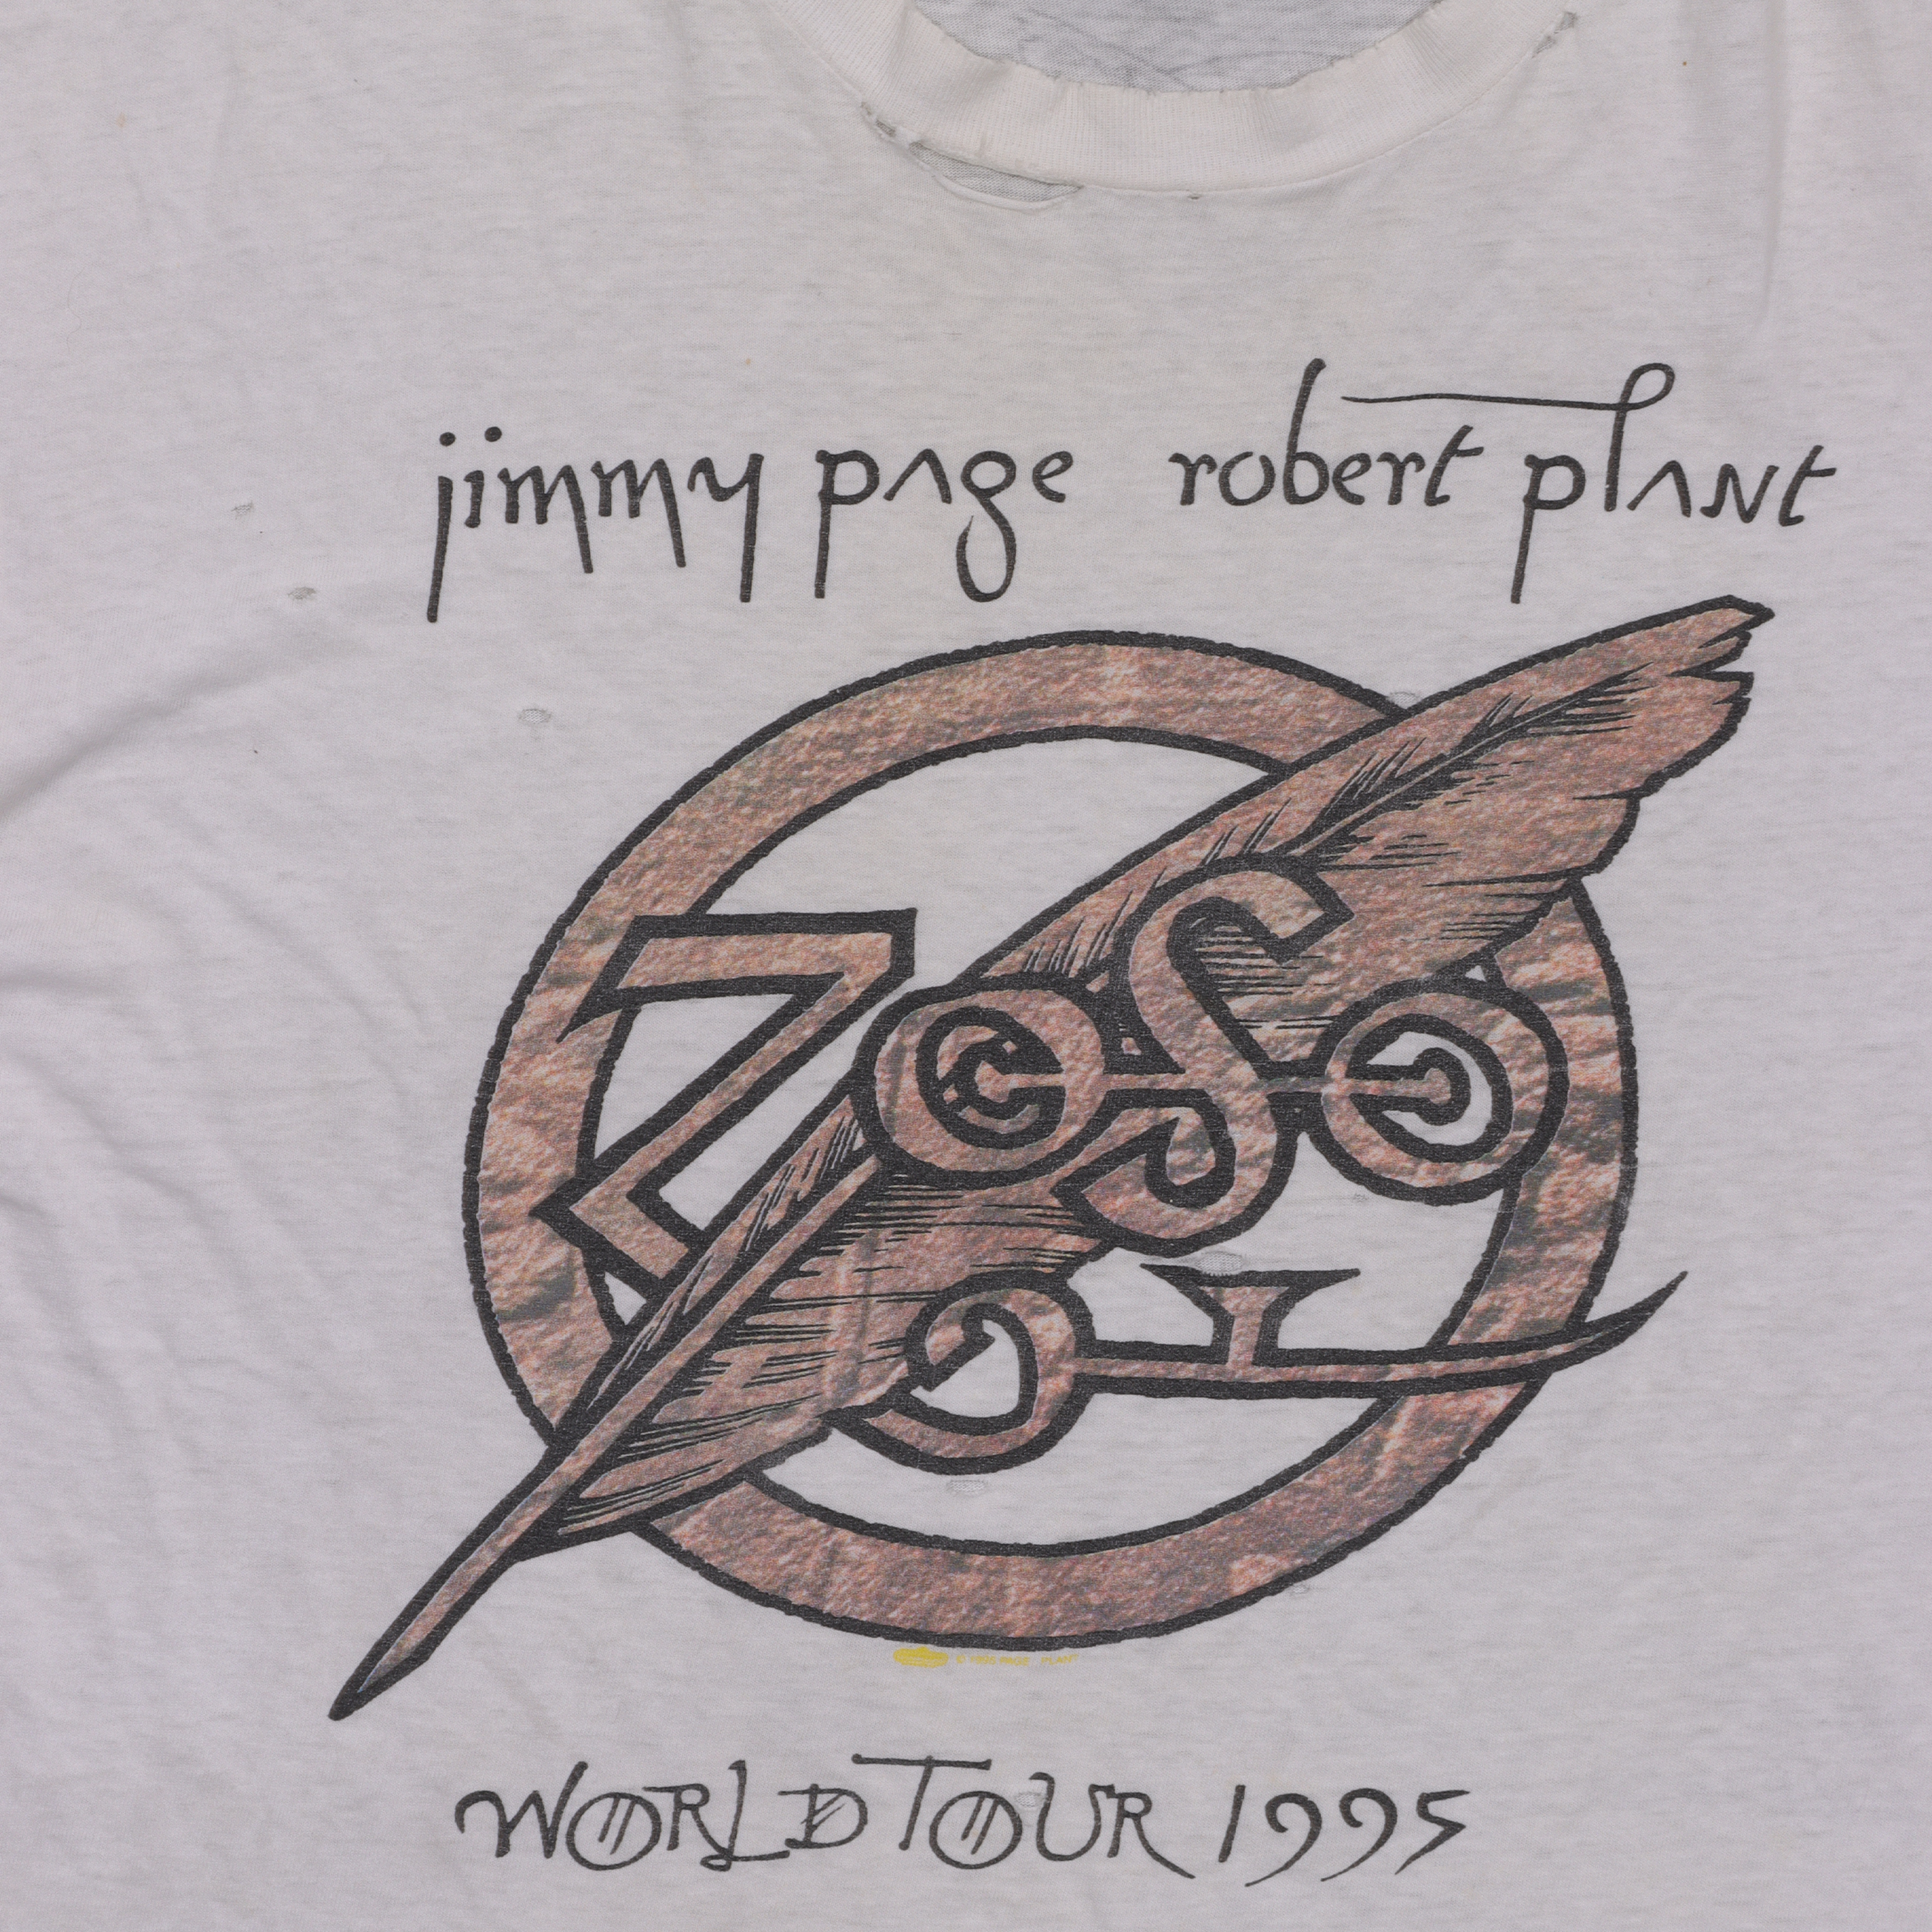 1995 Jimmy Page Tour T-Shirt